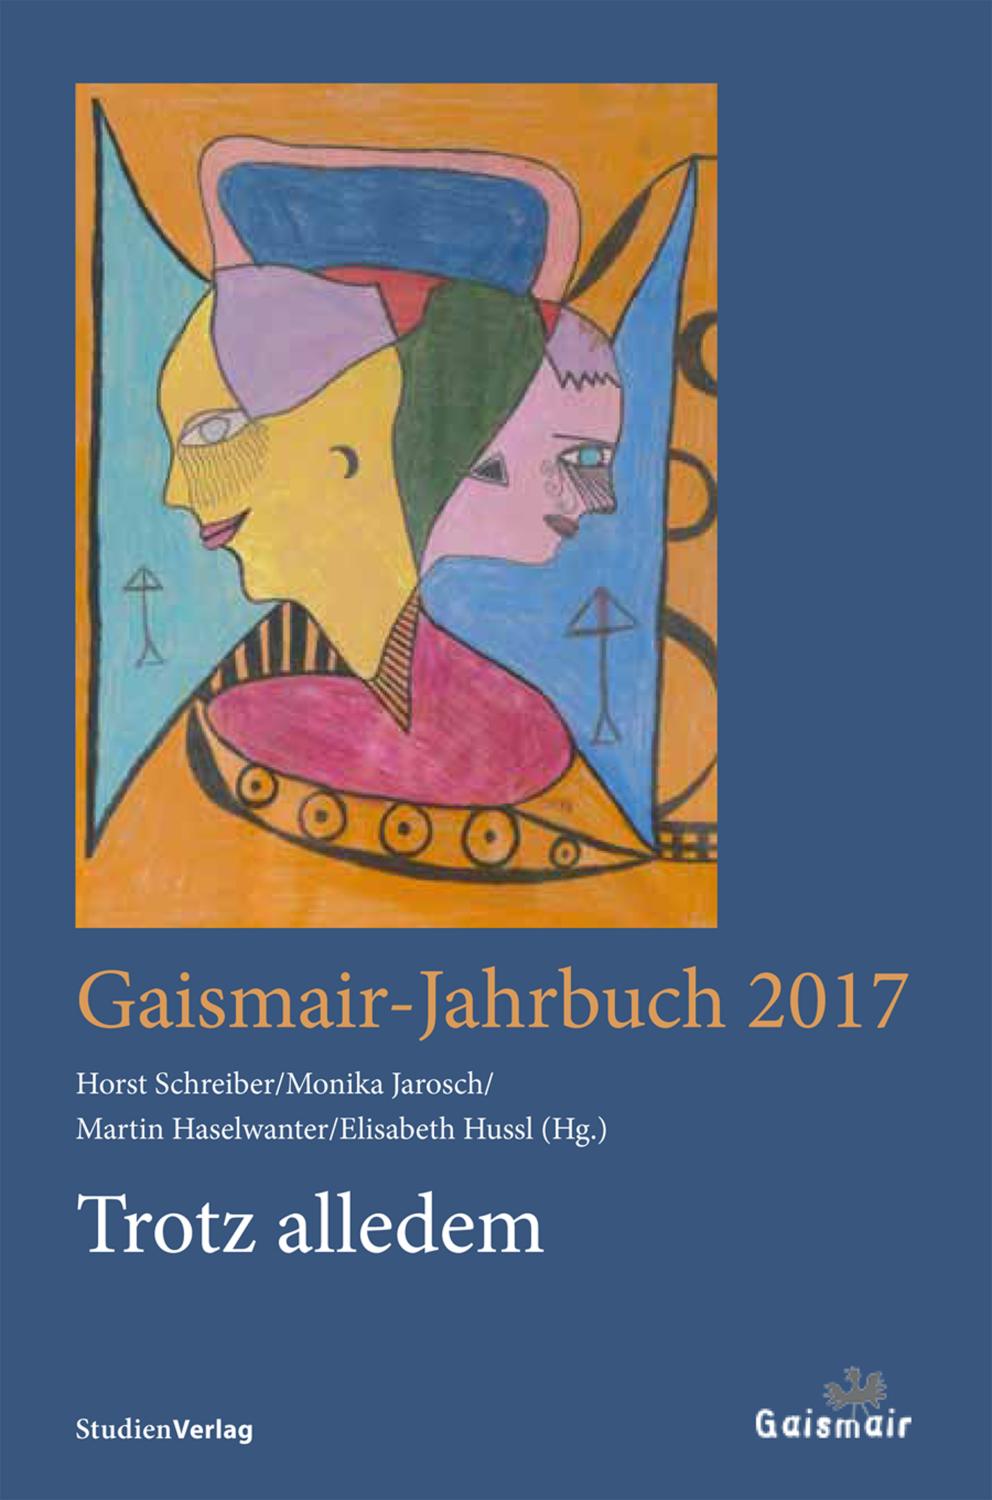 Trotz alledem: Gaismair-Jahrbuch 2017 (Jahrbuch der Michael-Gaismair-Gesellschaft)